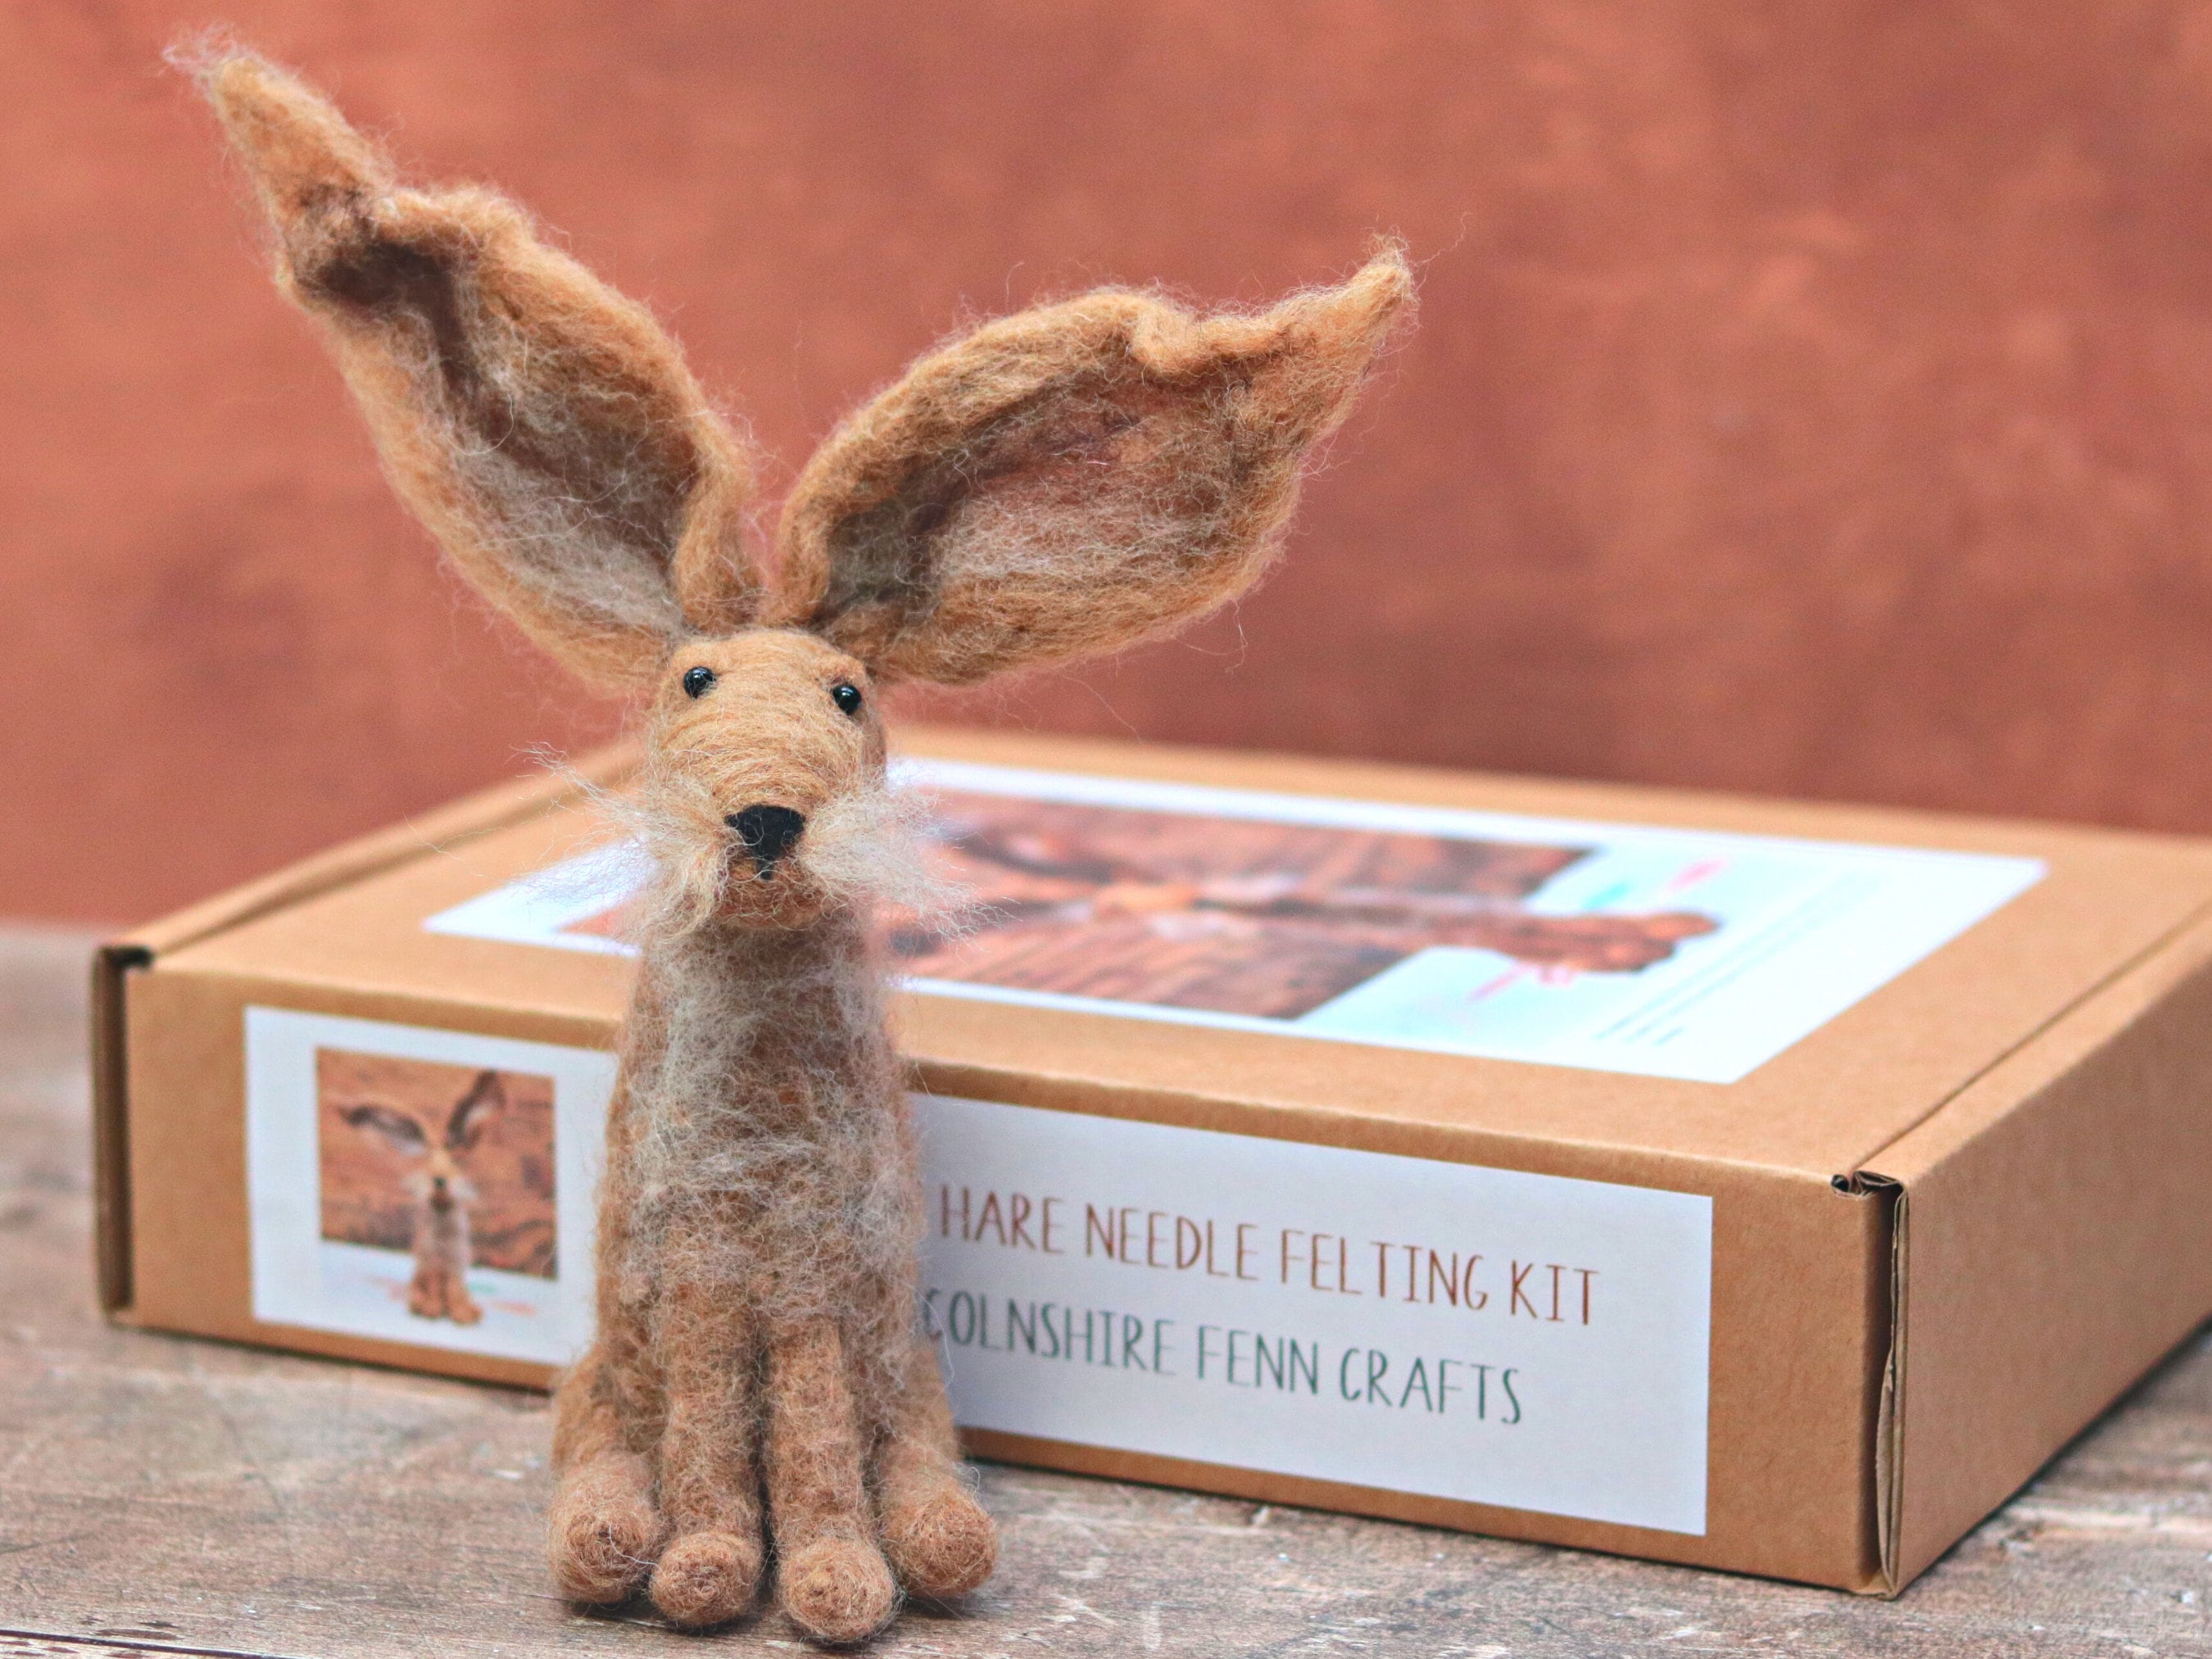 Kit: Bunny Needle Felt Kit, DIY Craft Kit, Felting Kit 